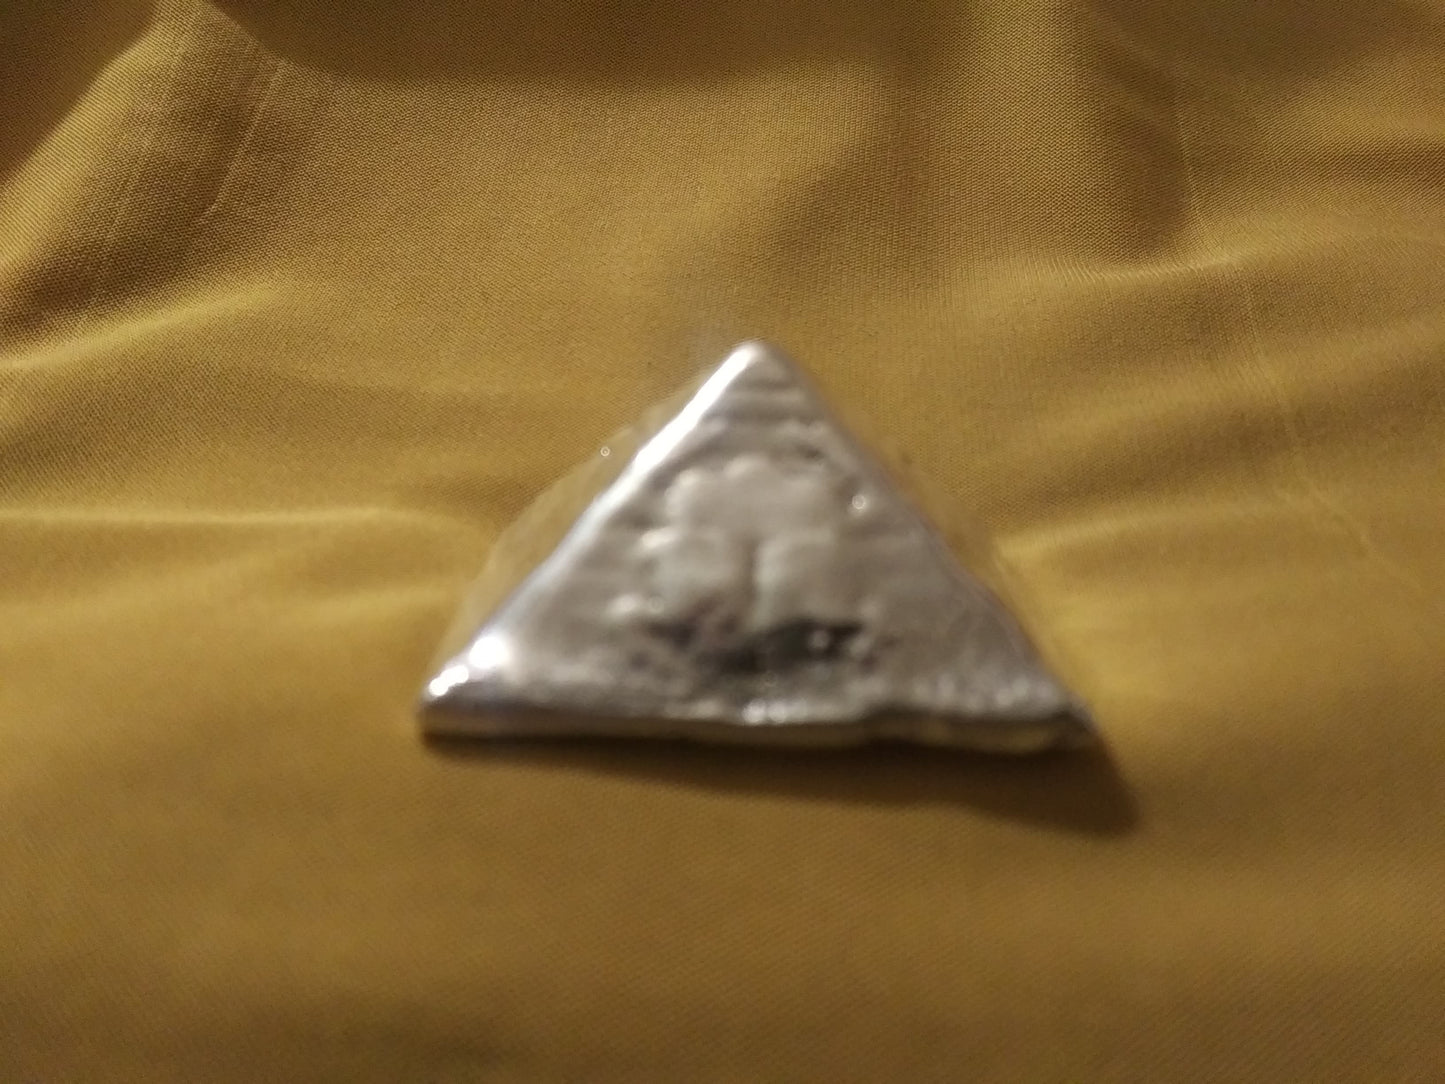 Egyptian Pyramid 40 Grams 999 Fine Silver